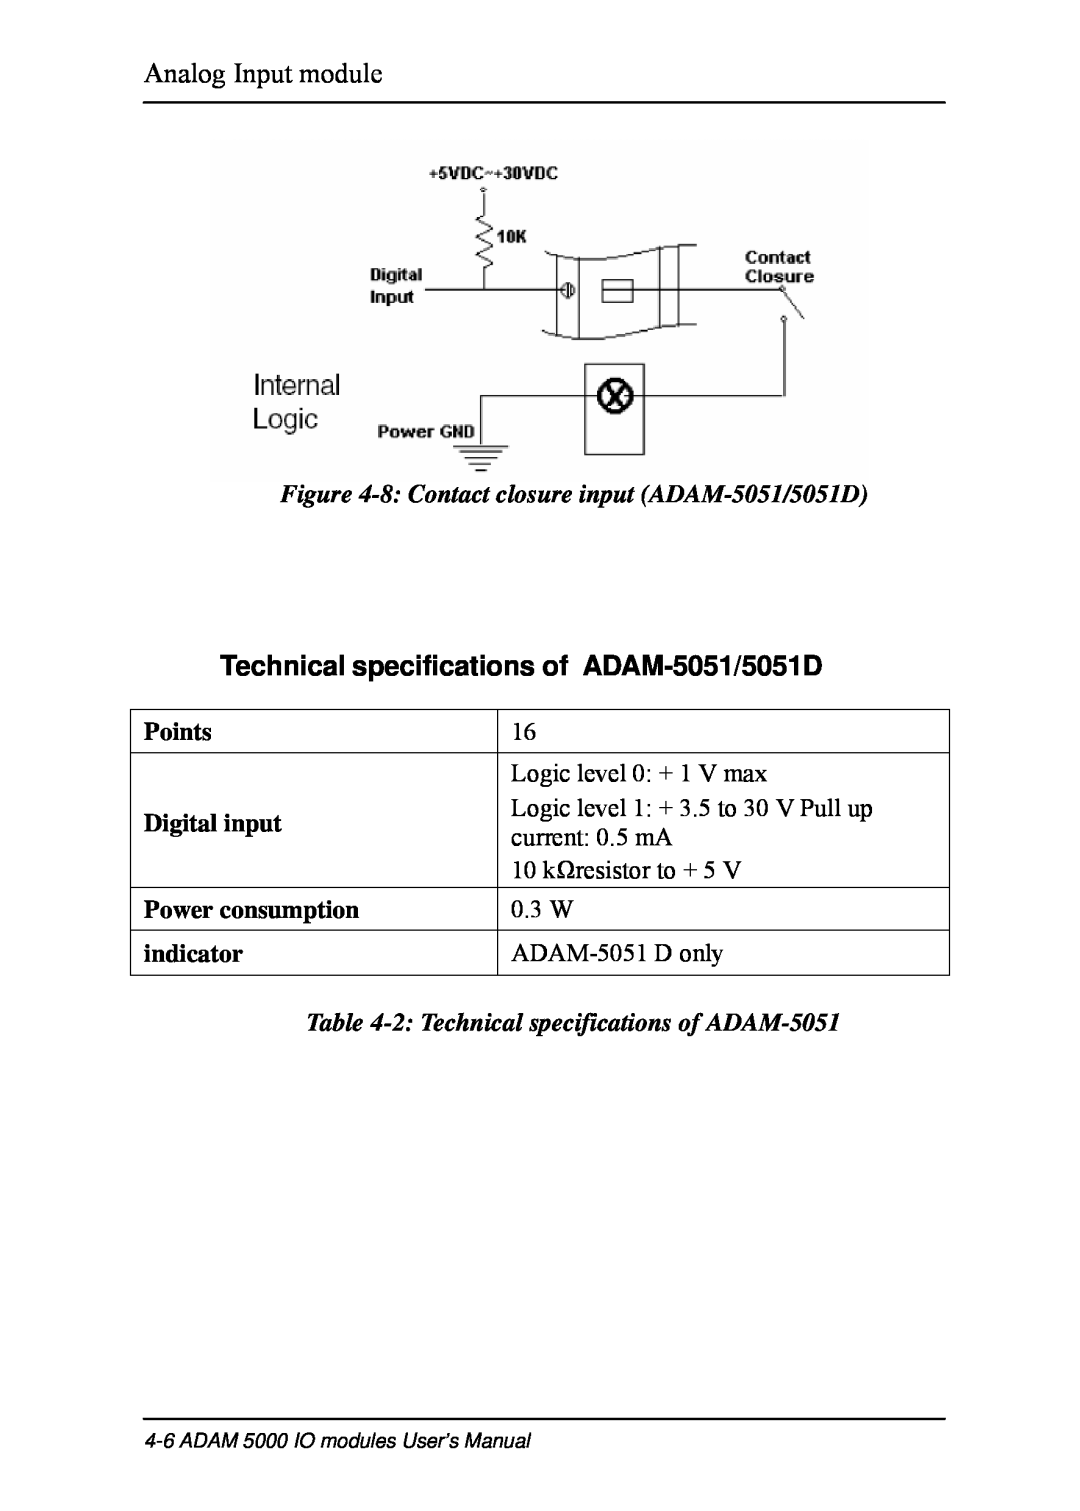 B&B Electronics 5000 Series Technical specifications of ADAM-5051/5051D, 8 Contact closure input ADAM-5051/5051D, Points 